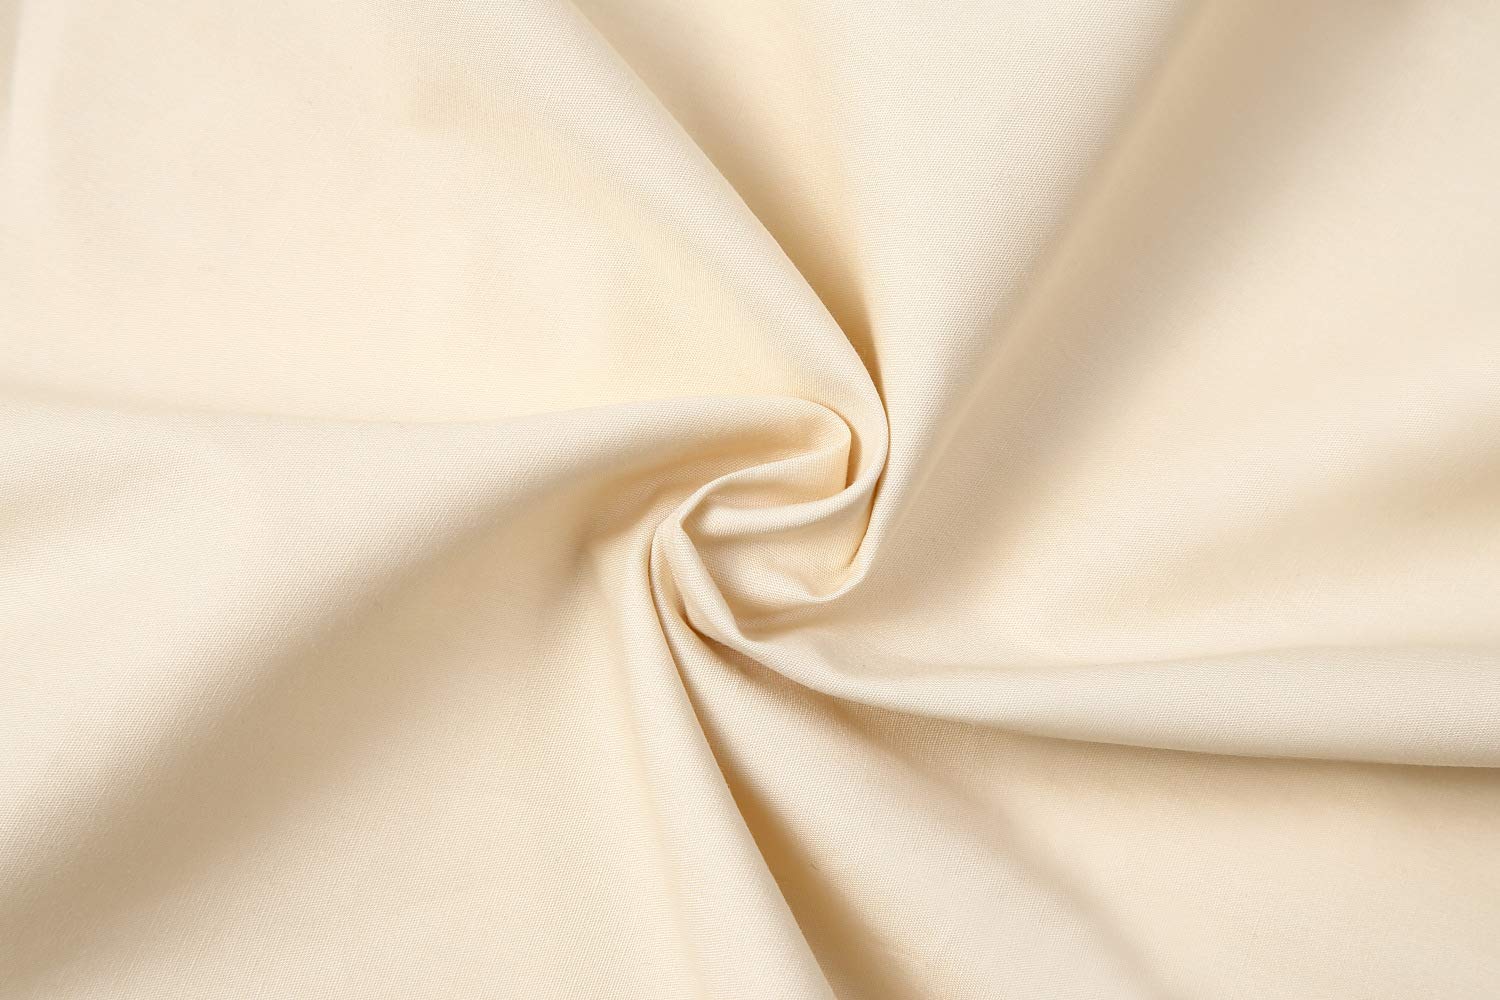 MIINA 100% Cotton Cover for Traditional Japanese Floor Futon Mattress (Twin, Ivory)　 41" x 82" / for 39" x 80" Miina futon Mattress...